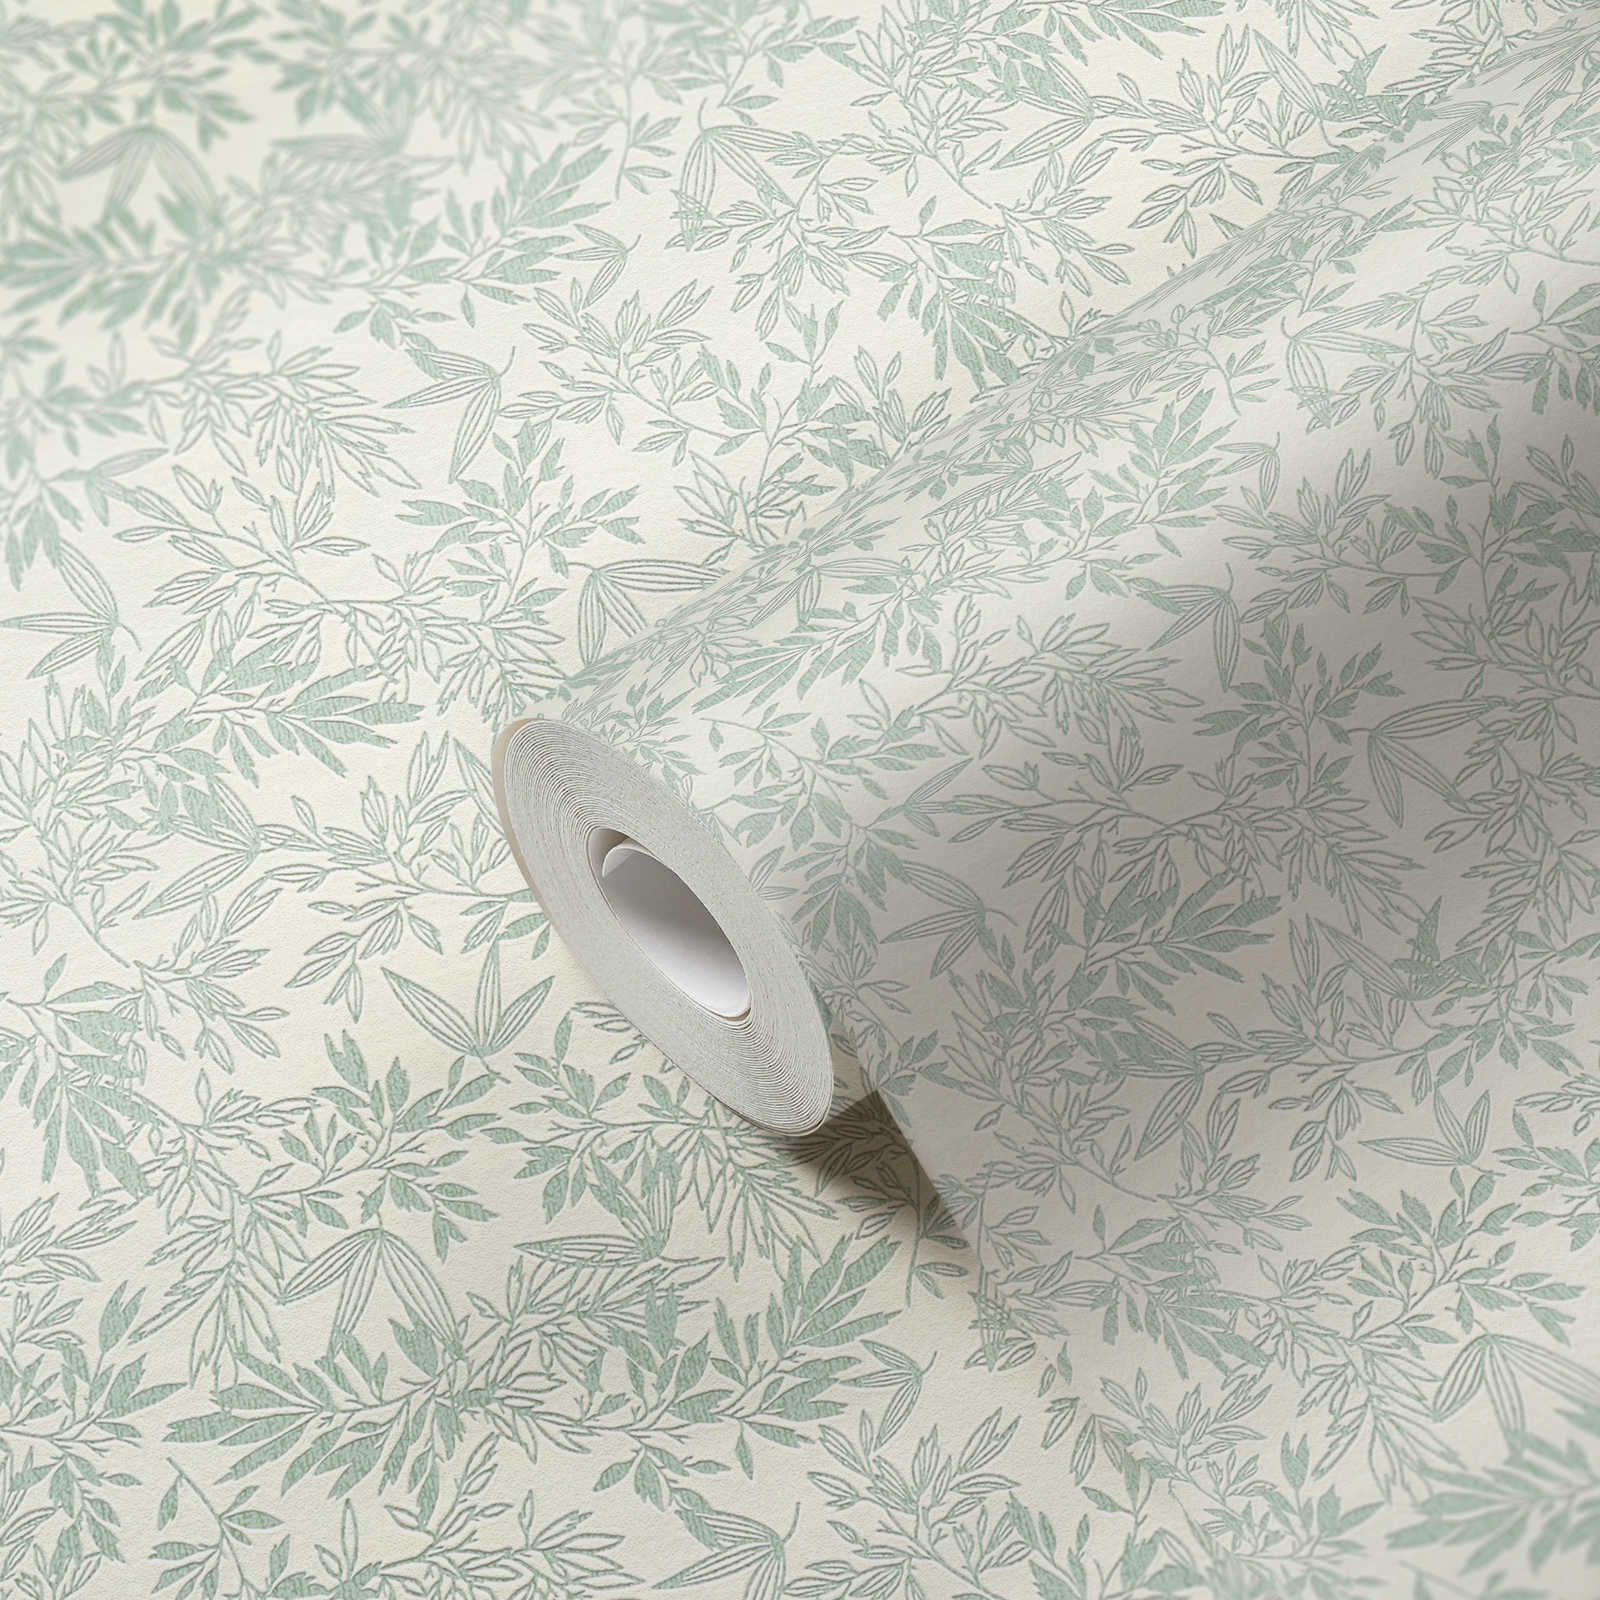             Non-woven wallpaper with large leaves motif matt - green, white
        